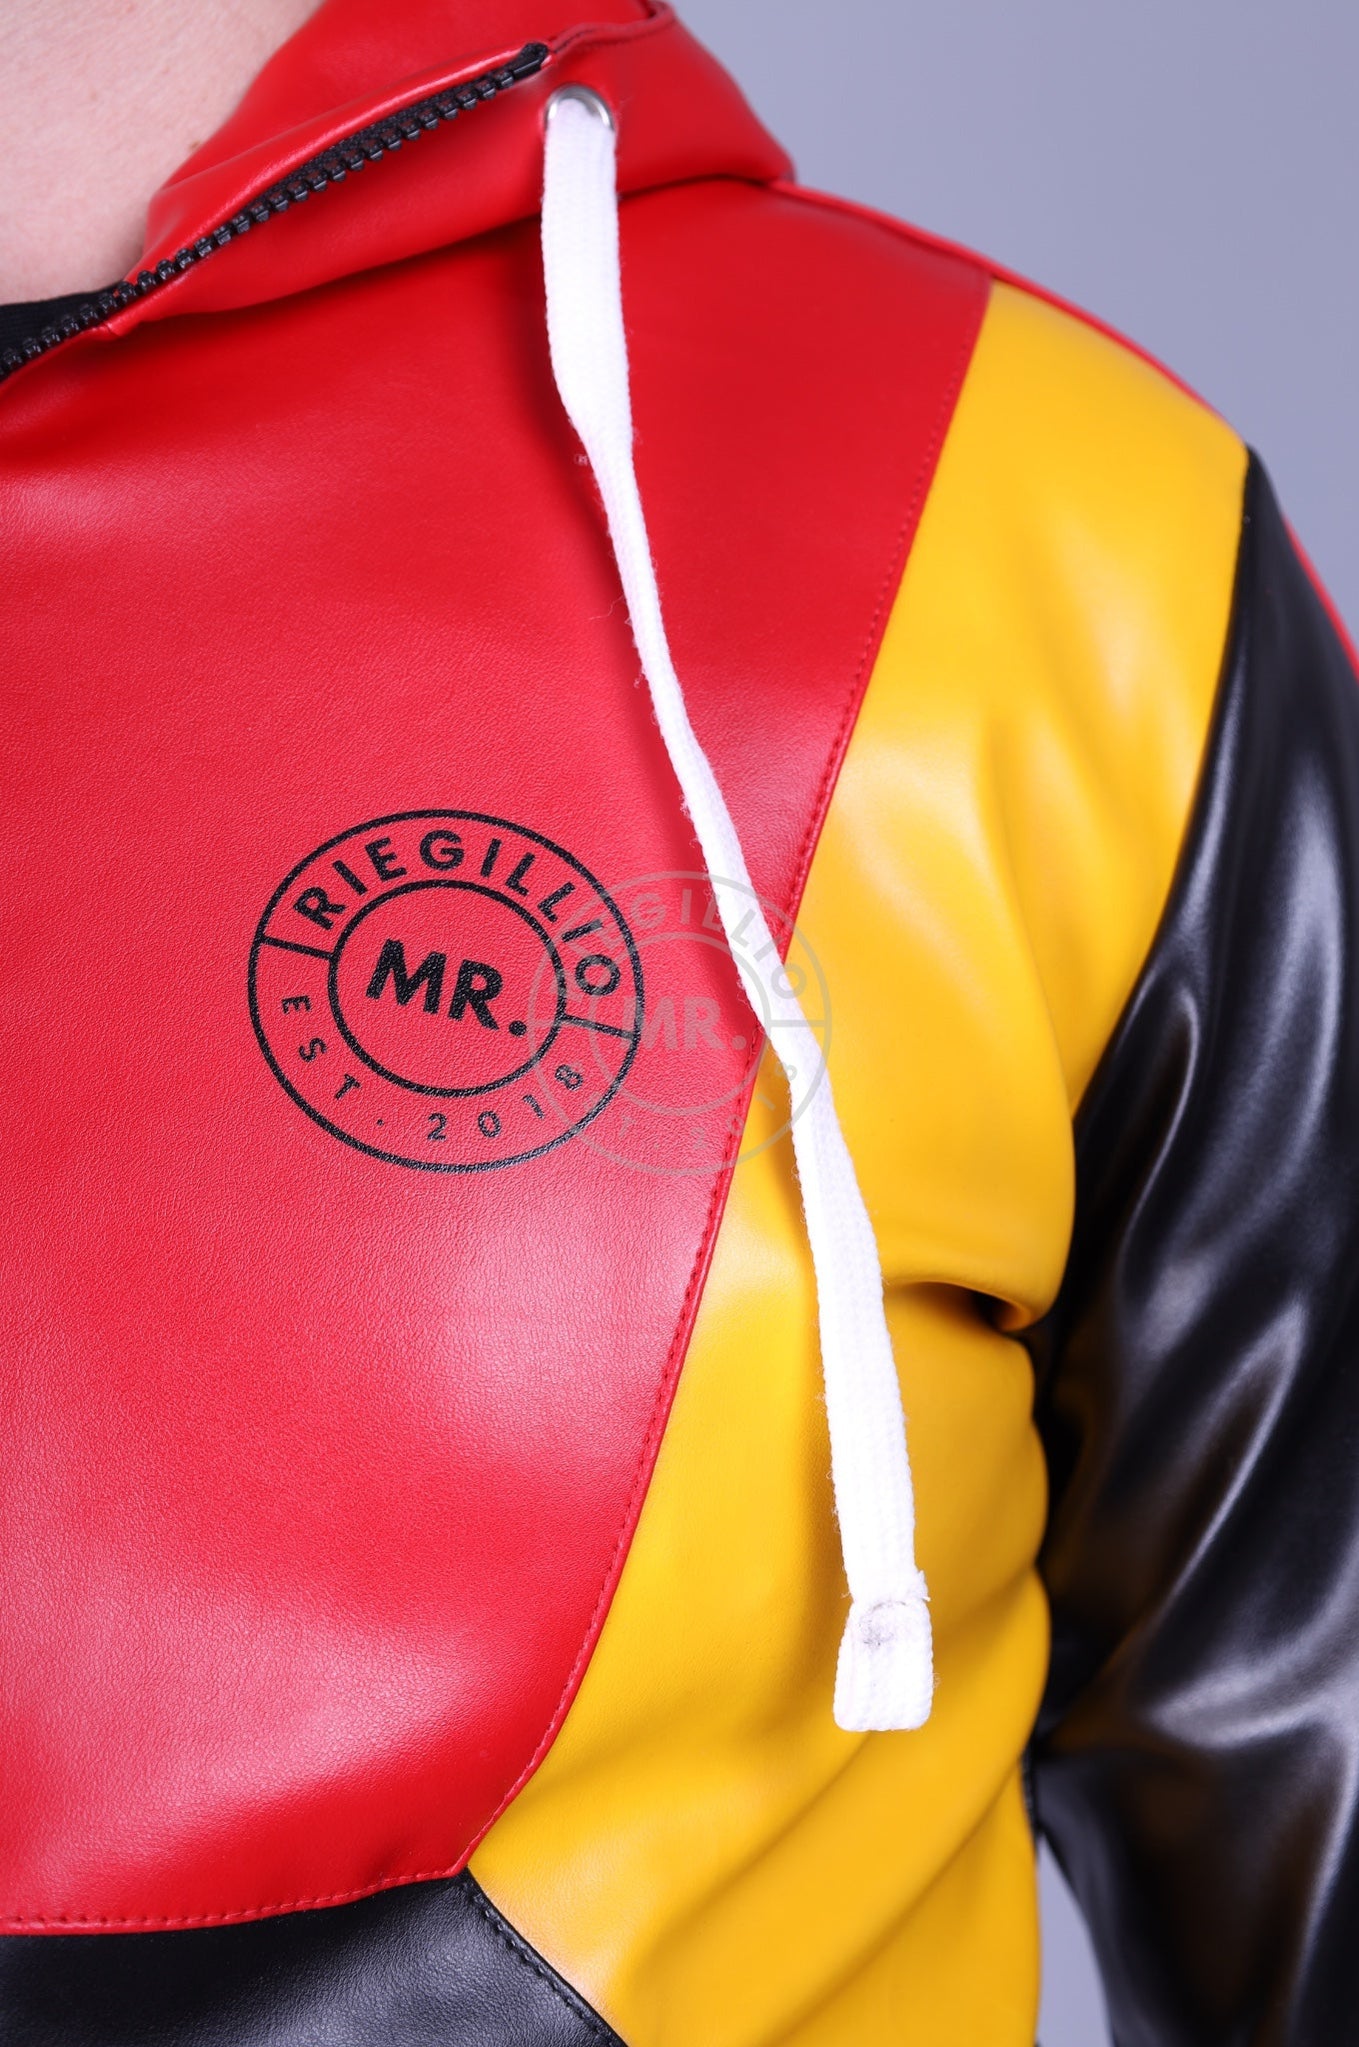 MR. Colored Tracksuit Jacket at MR. Riegillio